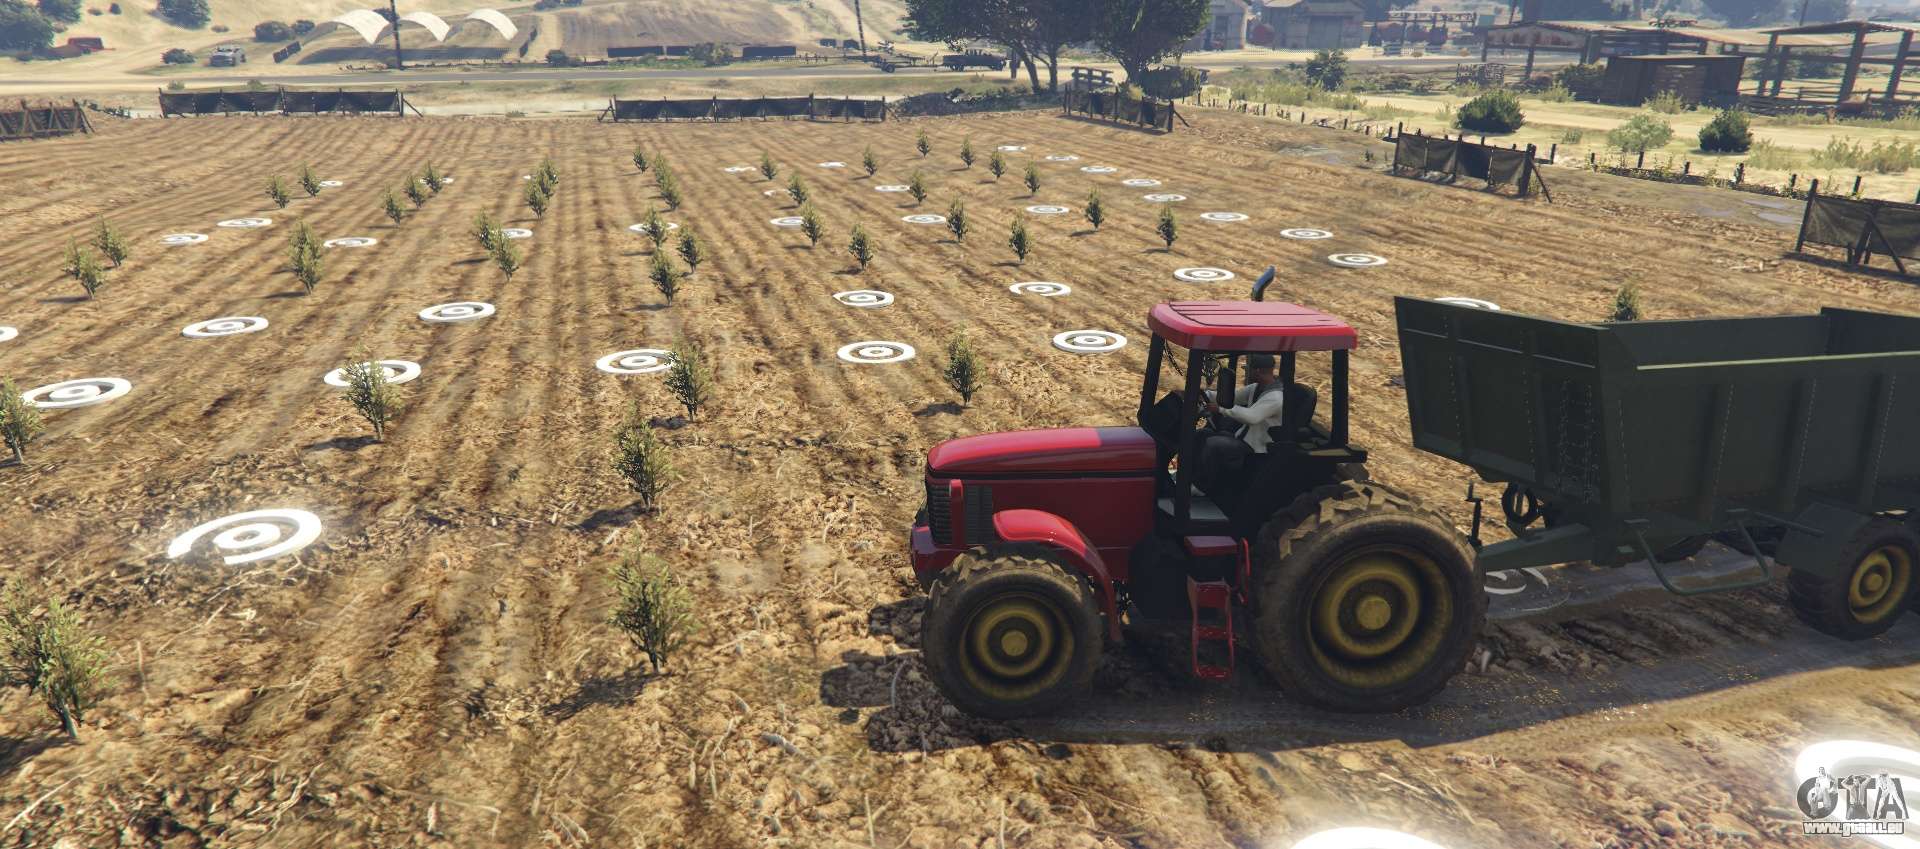 Farming Life Project - Mod 1.1 für GTA 5